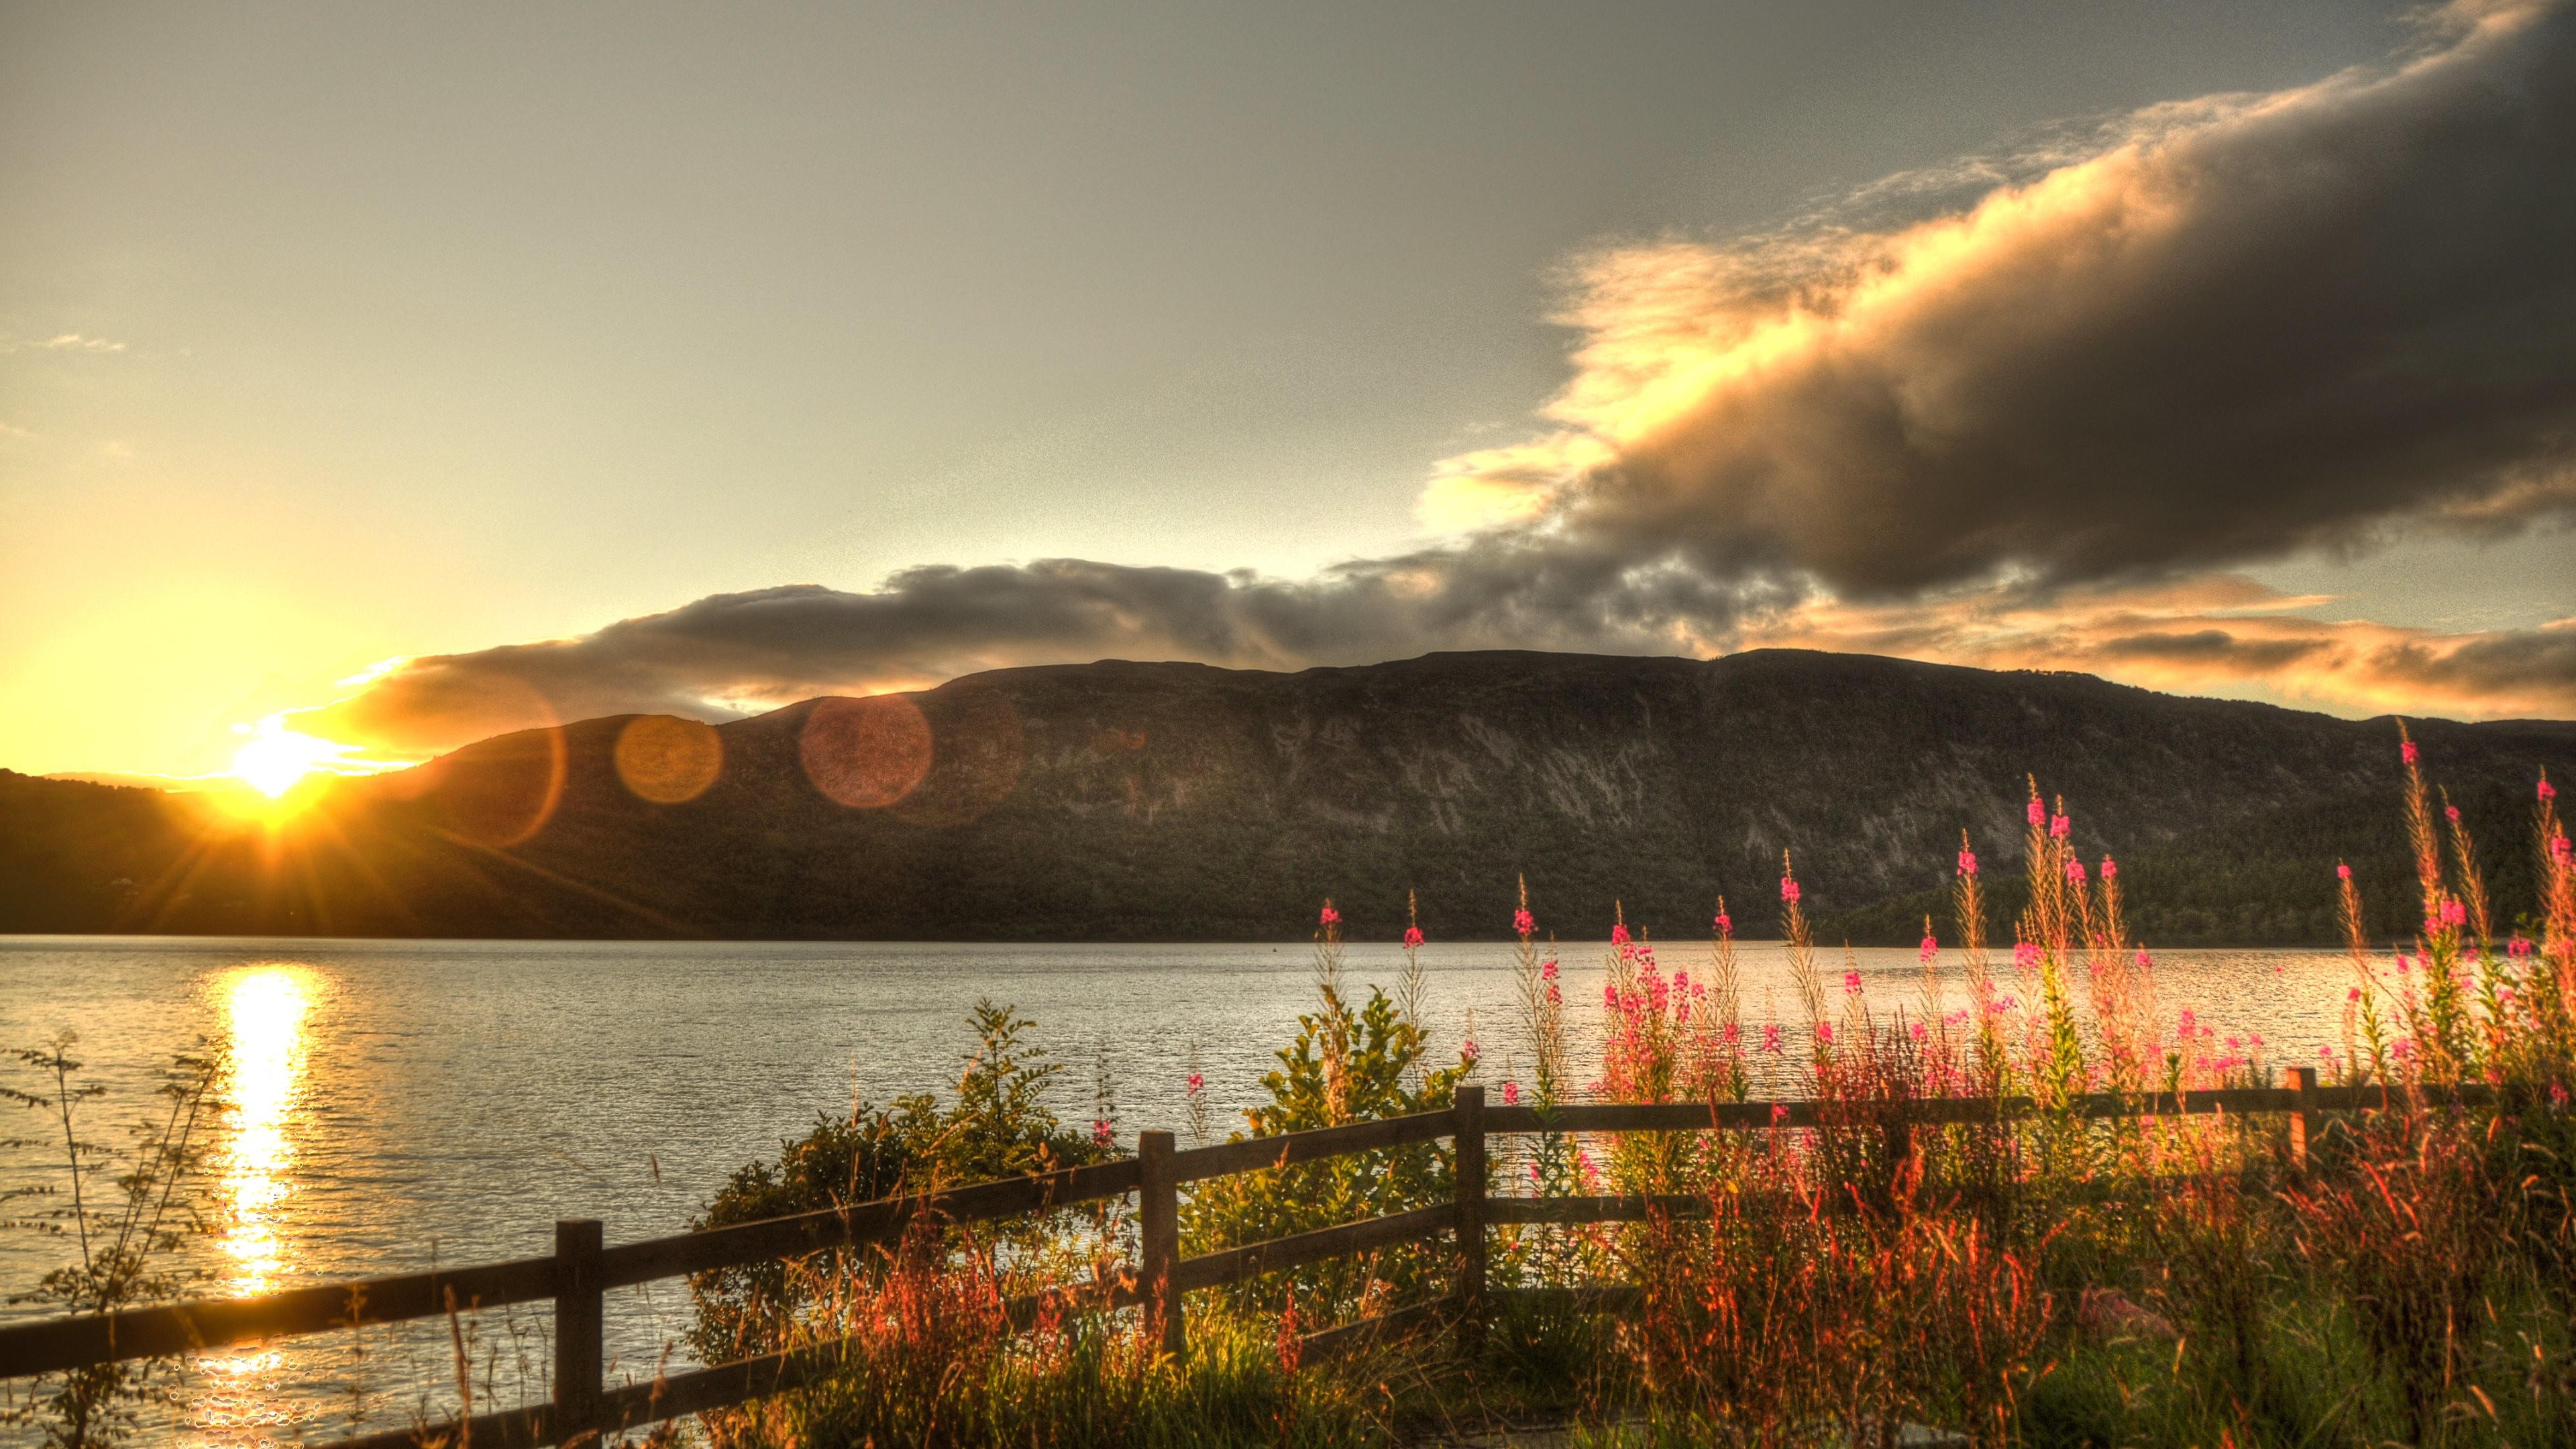 3840x2160 Wallpaper: Sunset over the Loch Ness Lake. Ultra HD 4K 